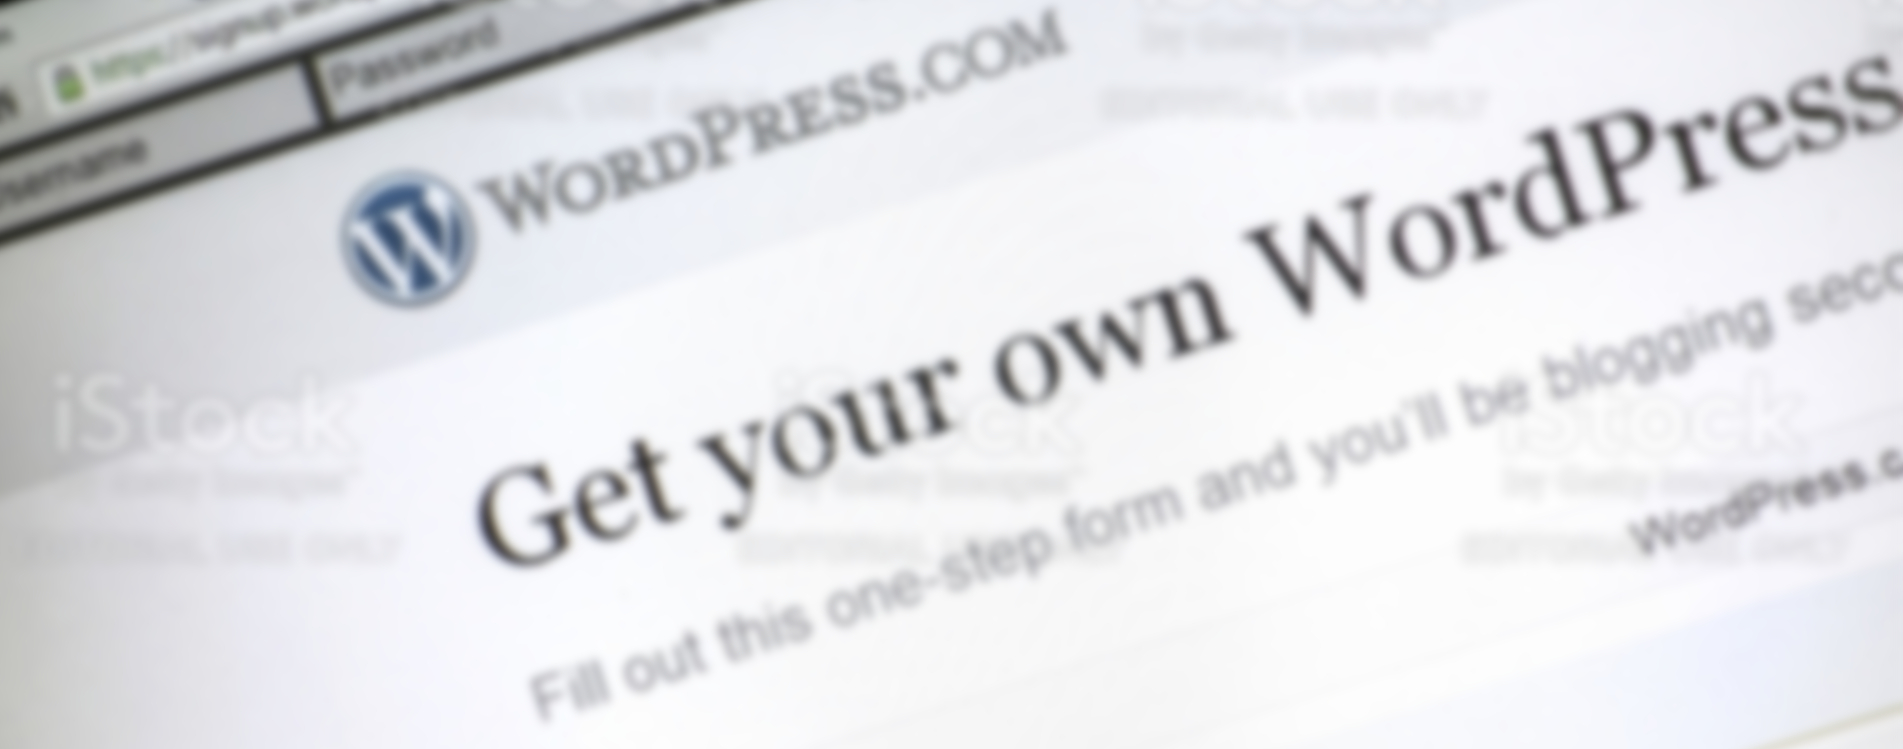 Description About Wordpress Development